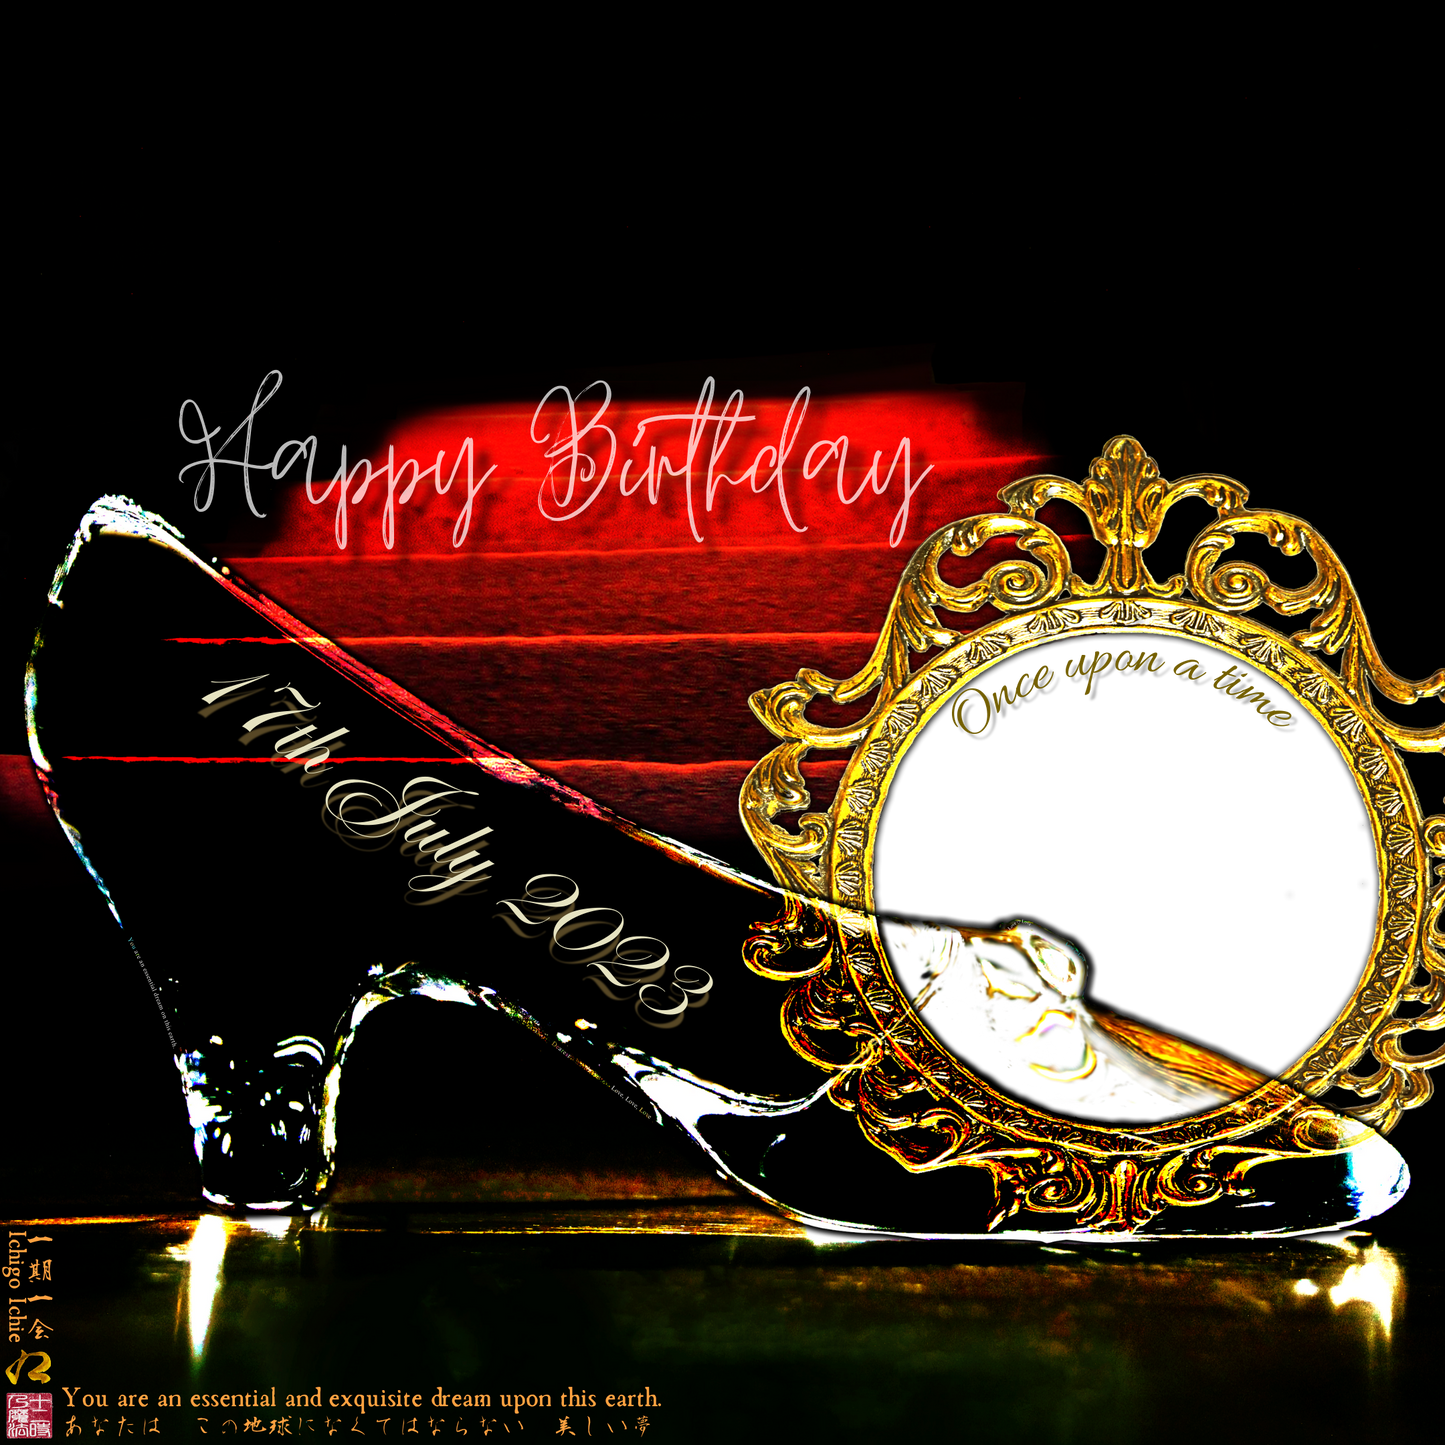 Happy Birthday Glass Slipper "Ichigo Ichie" 17th July 2023 the Right (1-of-1) NFT Art